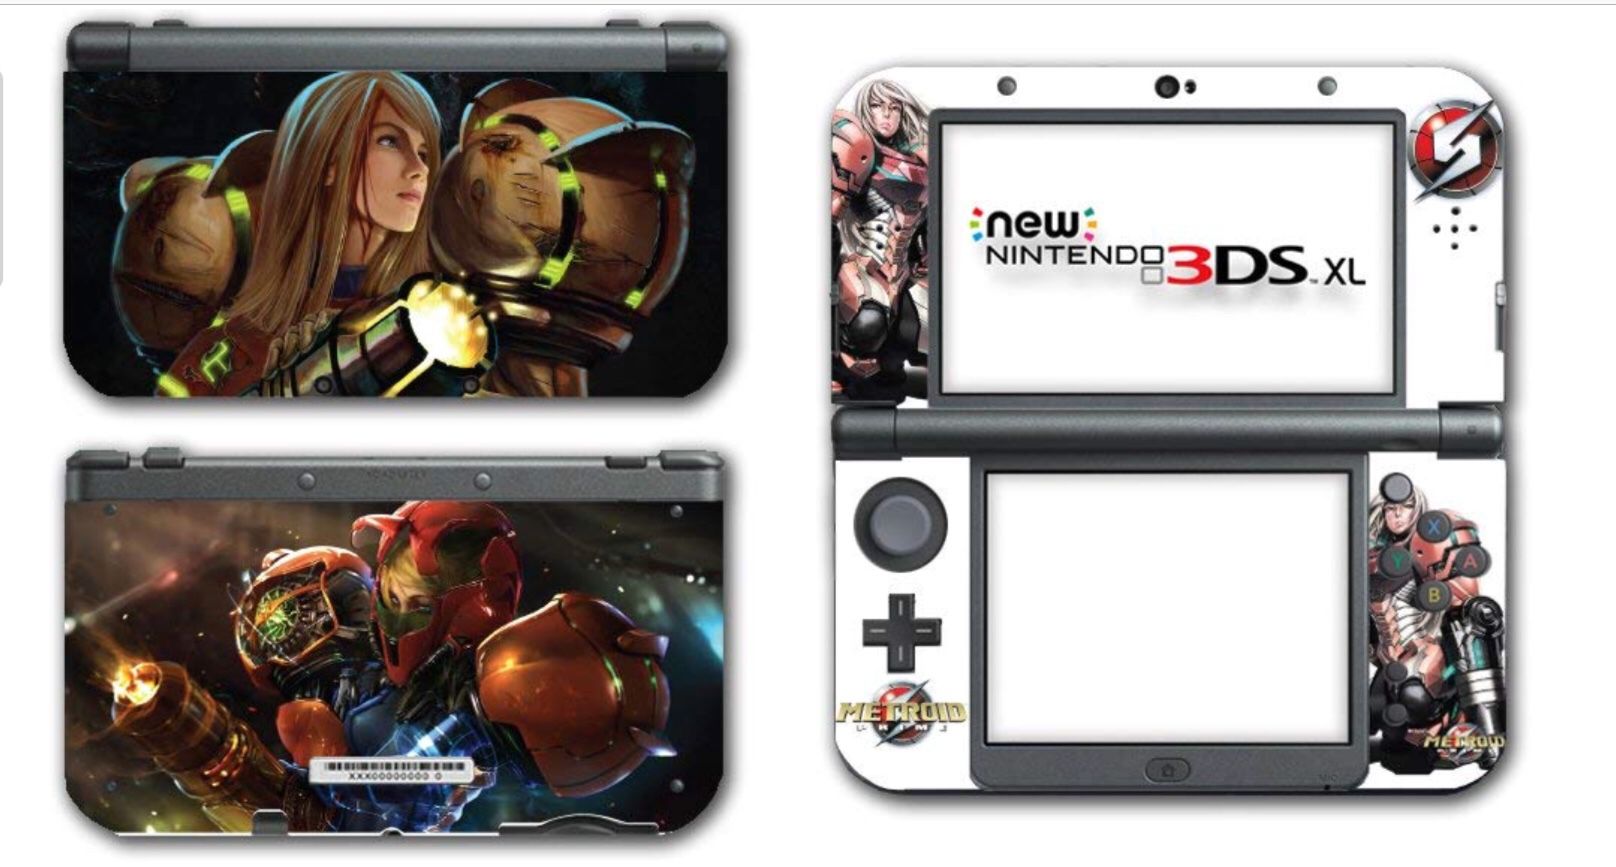 Nintendo *New* 3DS XL - Metroid decal/skin